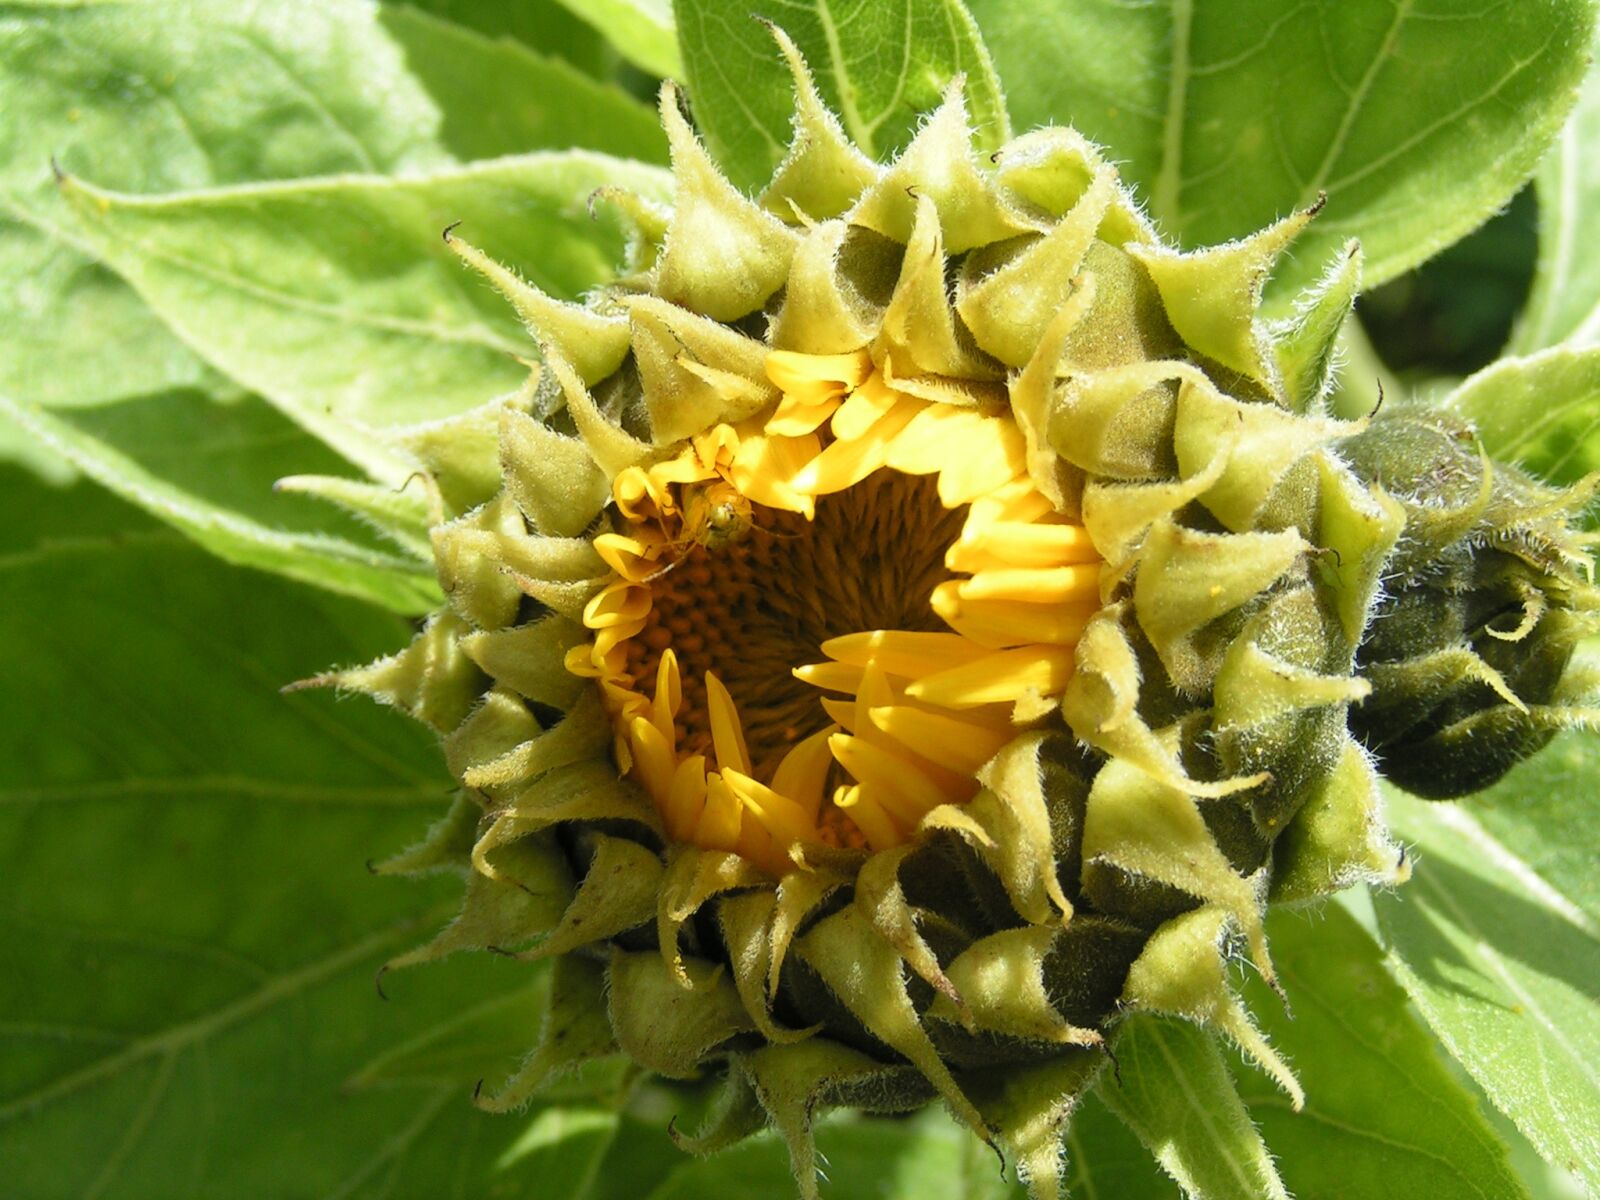 KONICA MINOLTA DiMAGE Z1 sample photo. Sunflower, nature, yellow photography